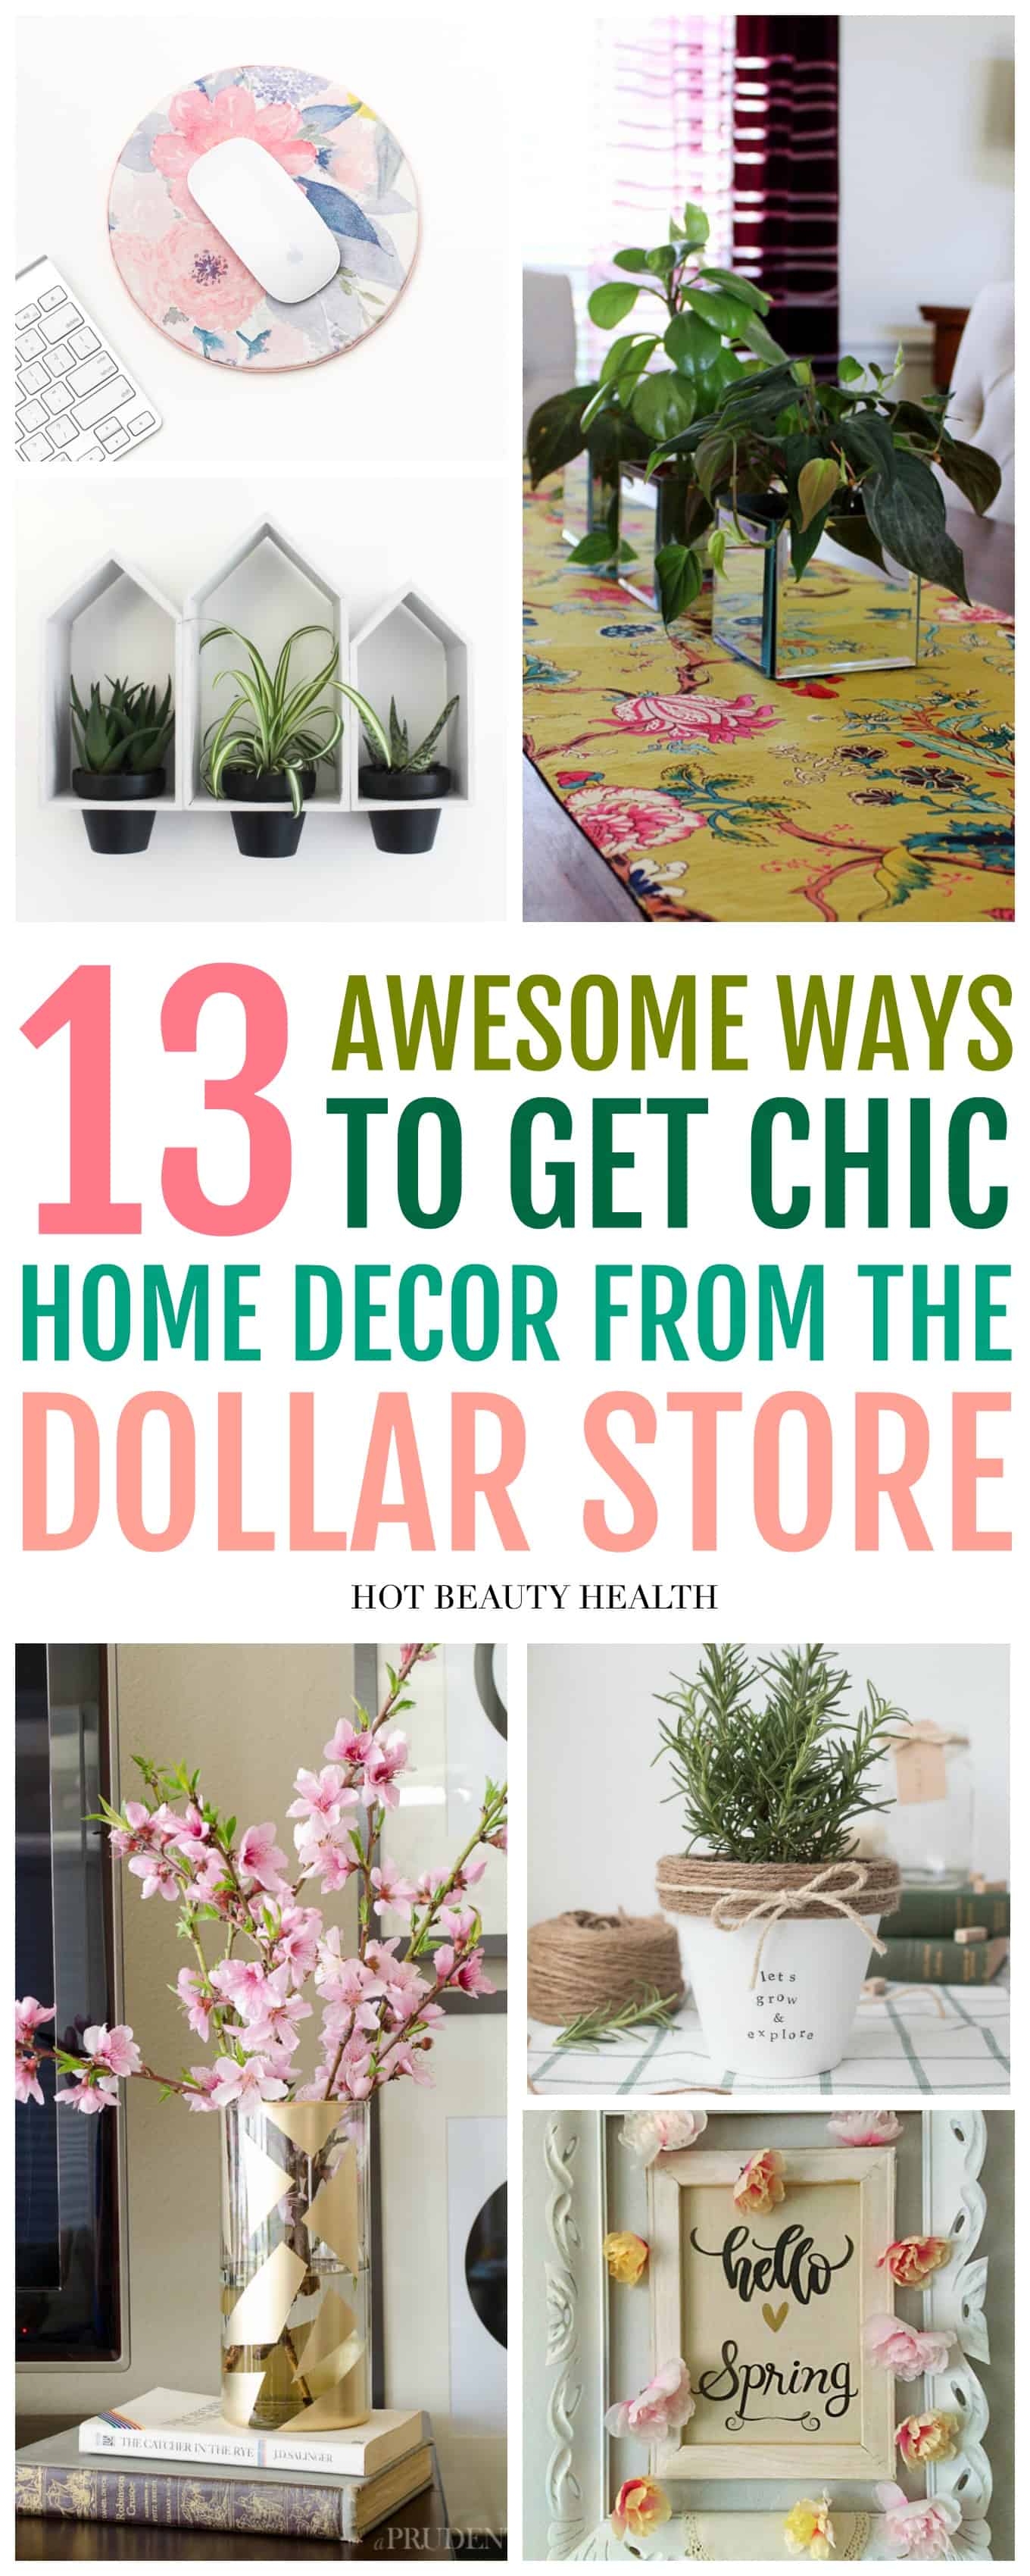 13 Dollar Store Home Decor Ideas You'll Love - Hot Beauty ...